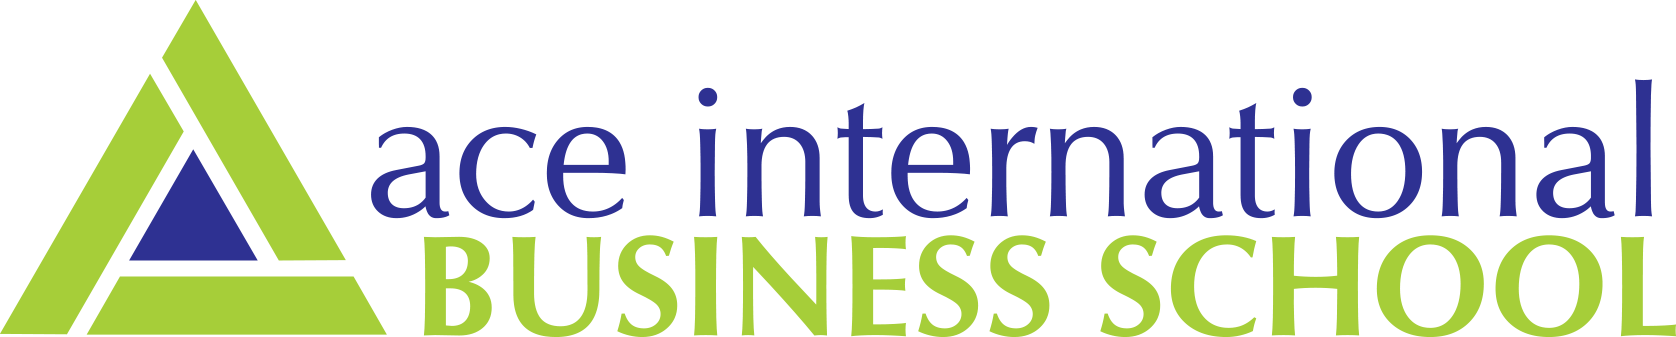 Ace International Business School Logo